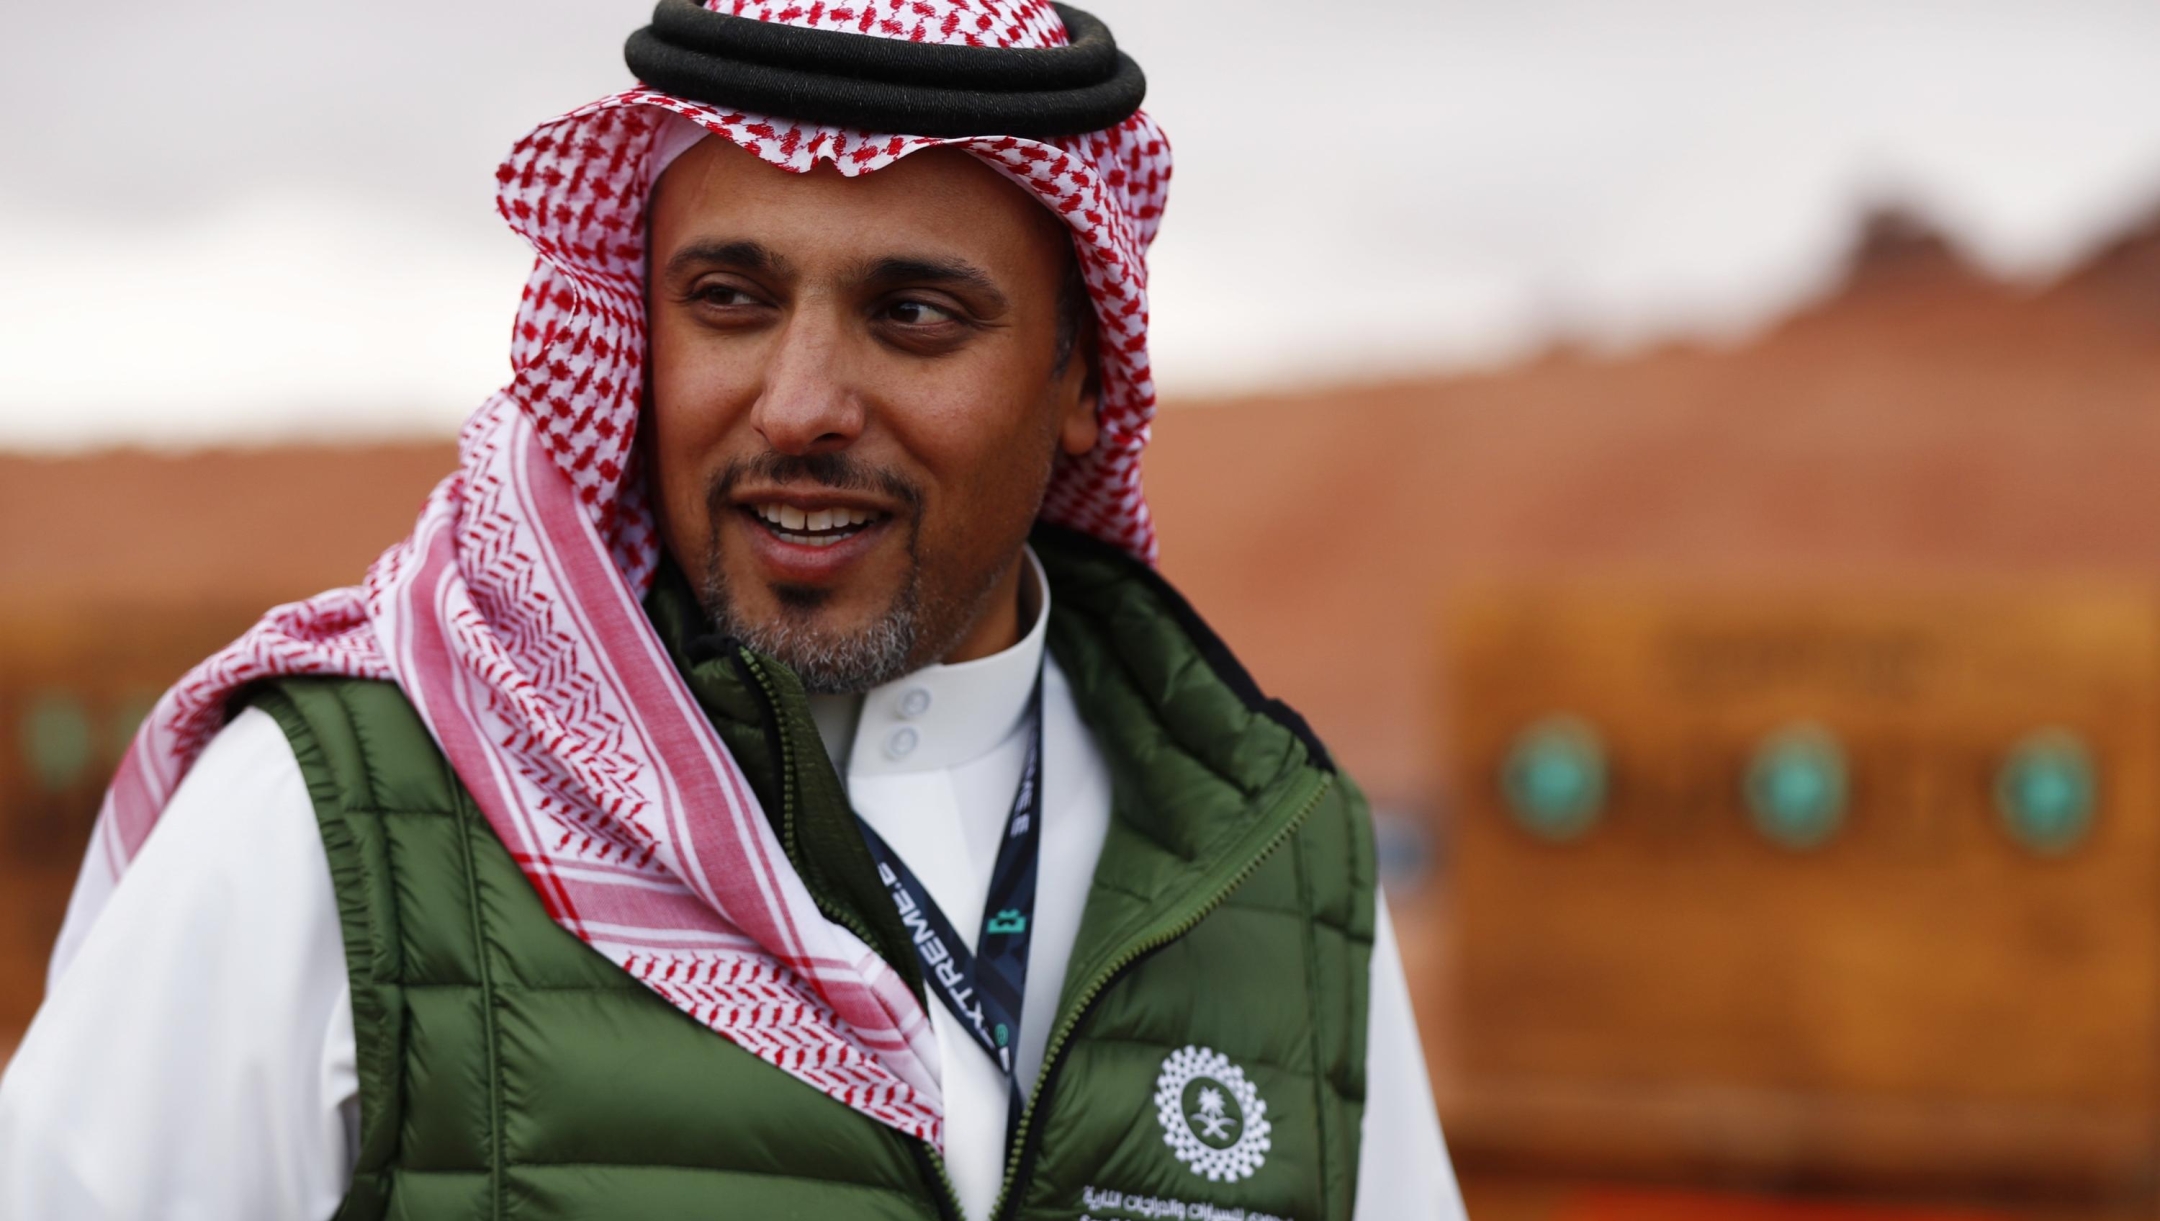 FEBRUARY 19: Prince Khalid bin Sultan Al-Abdullah Al-Faisal, Chairman of the Saudi Automobile and Motorcycle Federation (SAMF) and the Saudi Motorsport Company during the Saudi Arabia on February 19, 2022. (Photo by Carl Bingham / LAT Images)